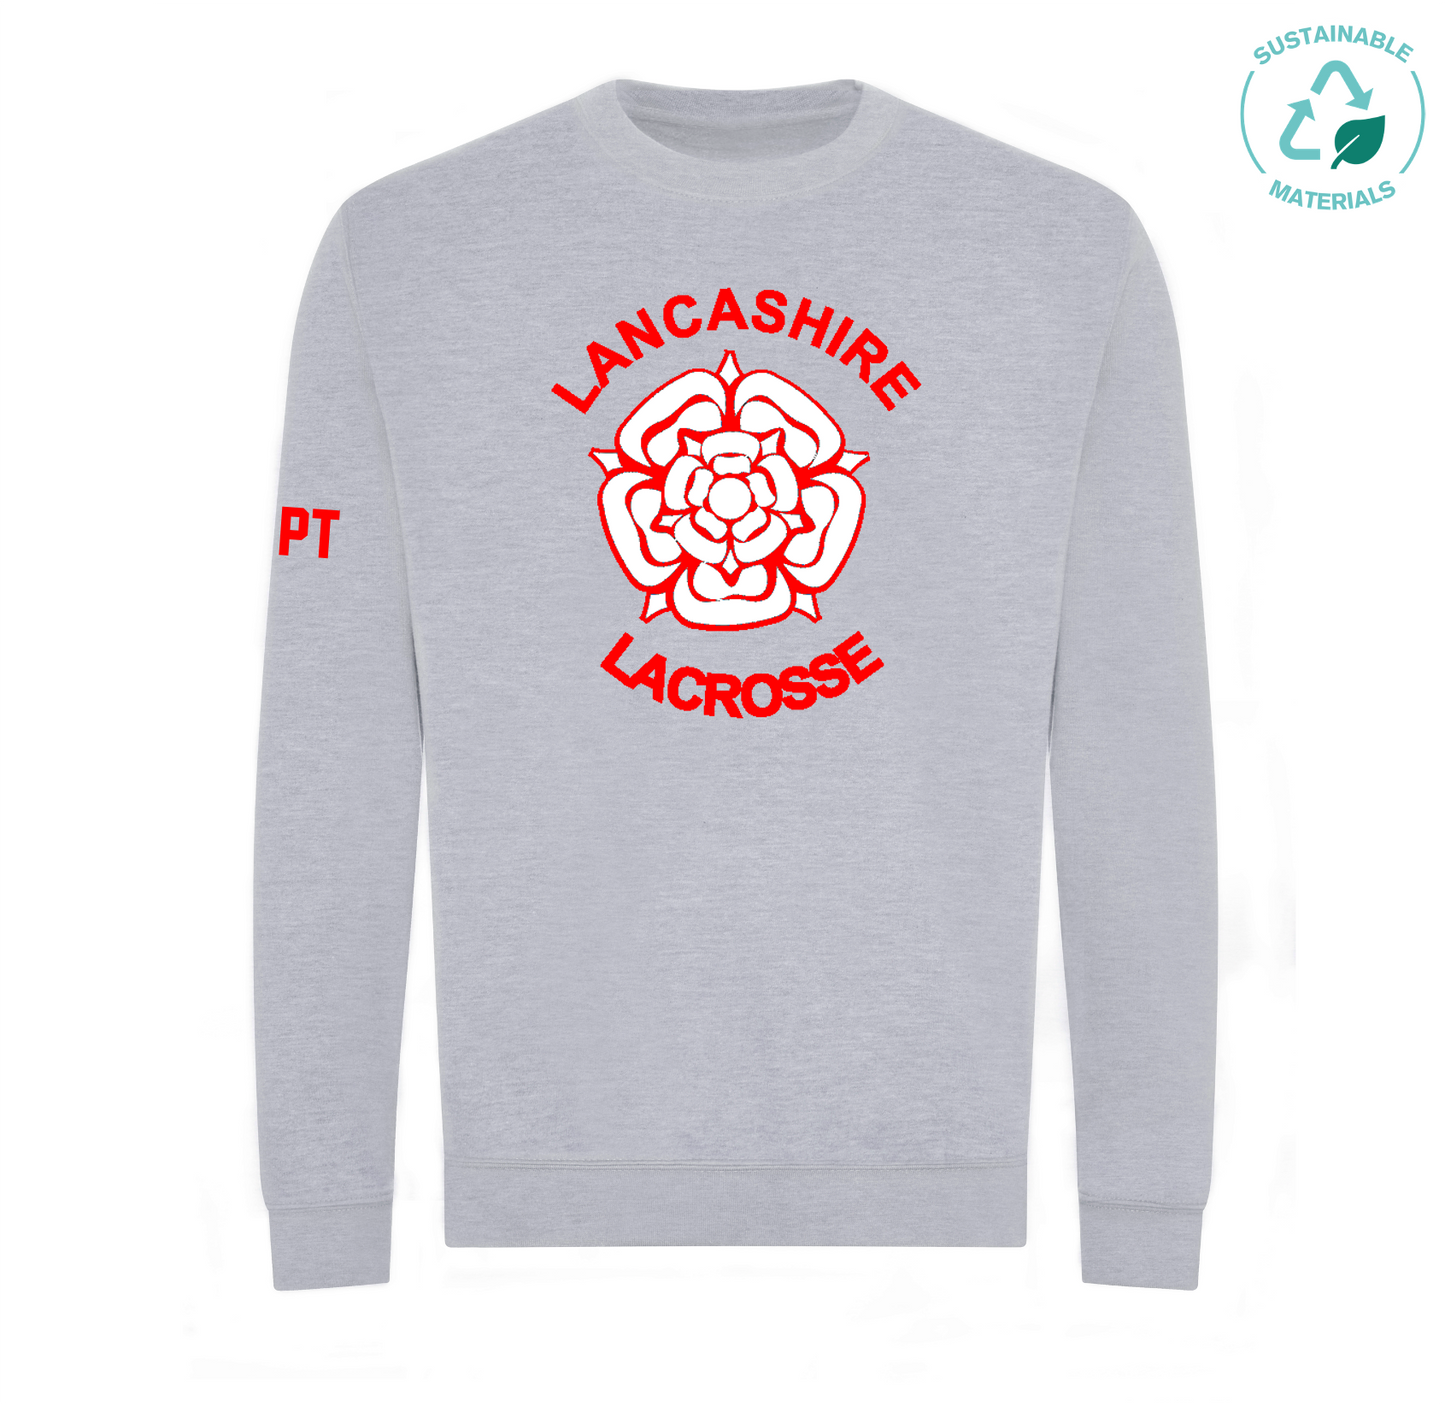 Lancashire Lacrosse Organic Sweatshirt